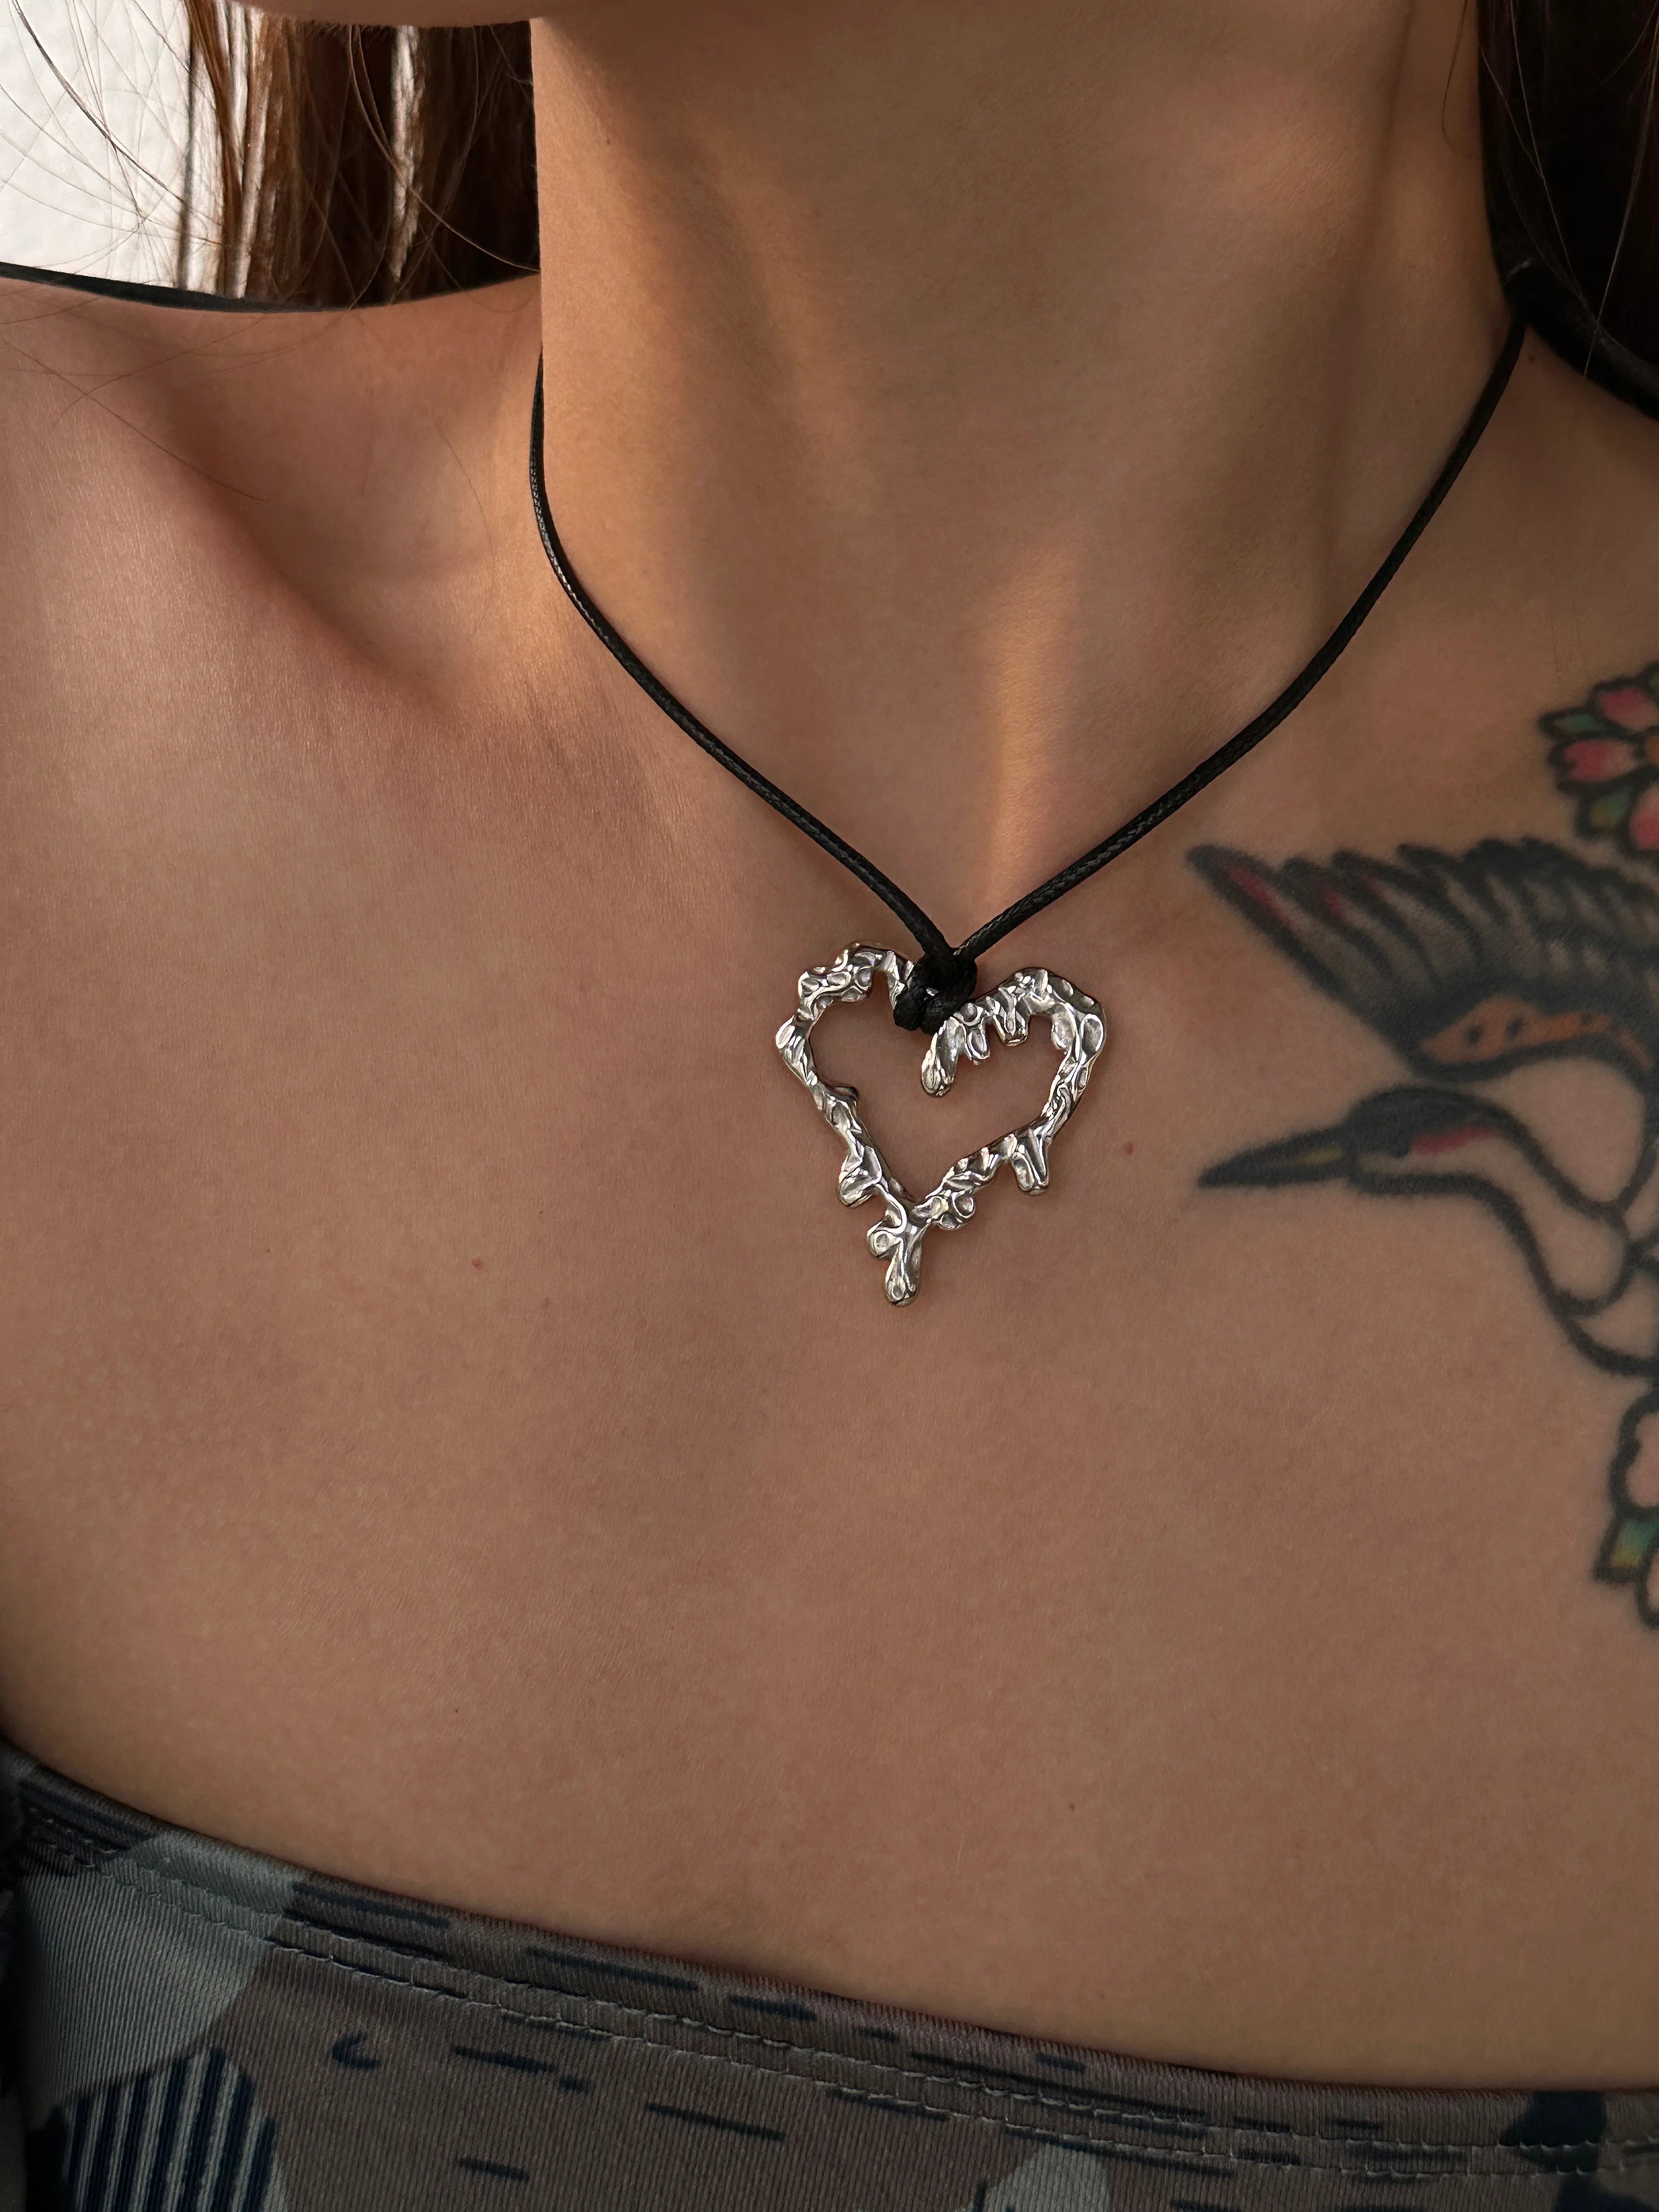 “Bleeding” Heart on Black Leather Necklace